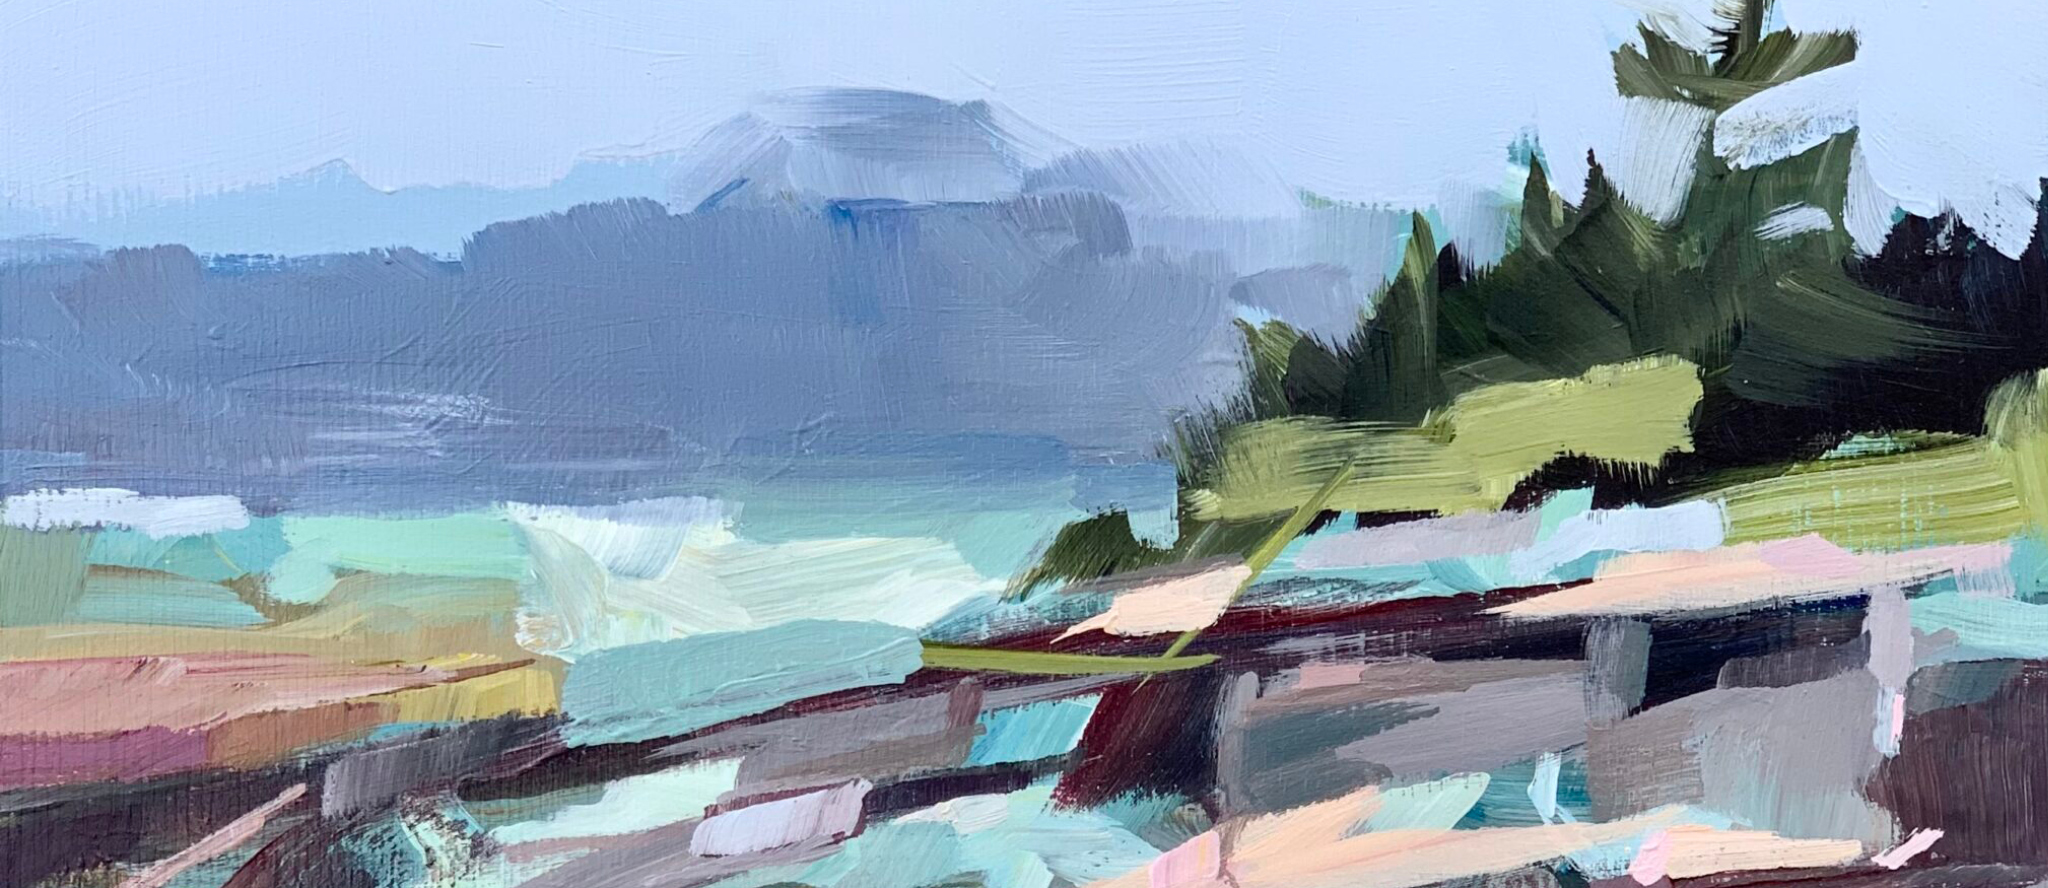 Detail of painting by Liz Prescott of the Maine coastline.